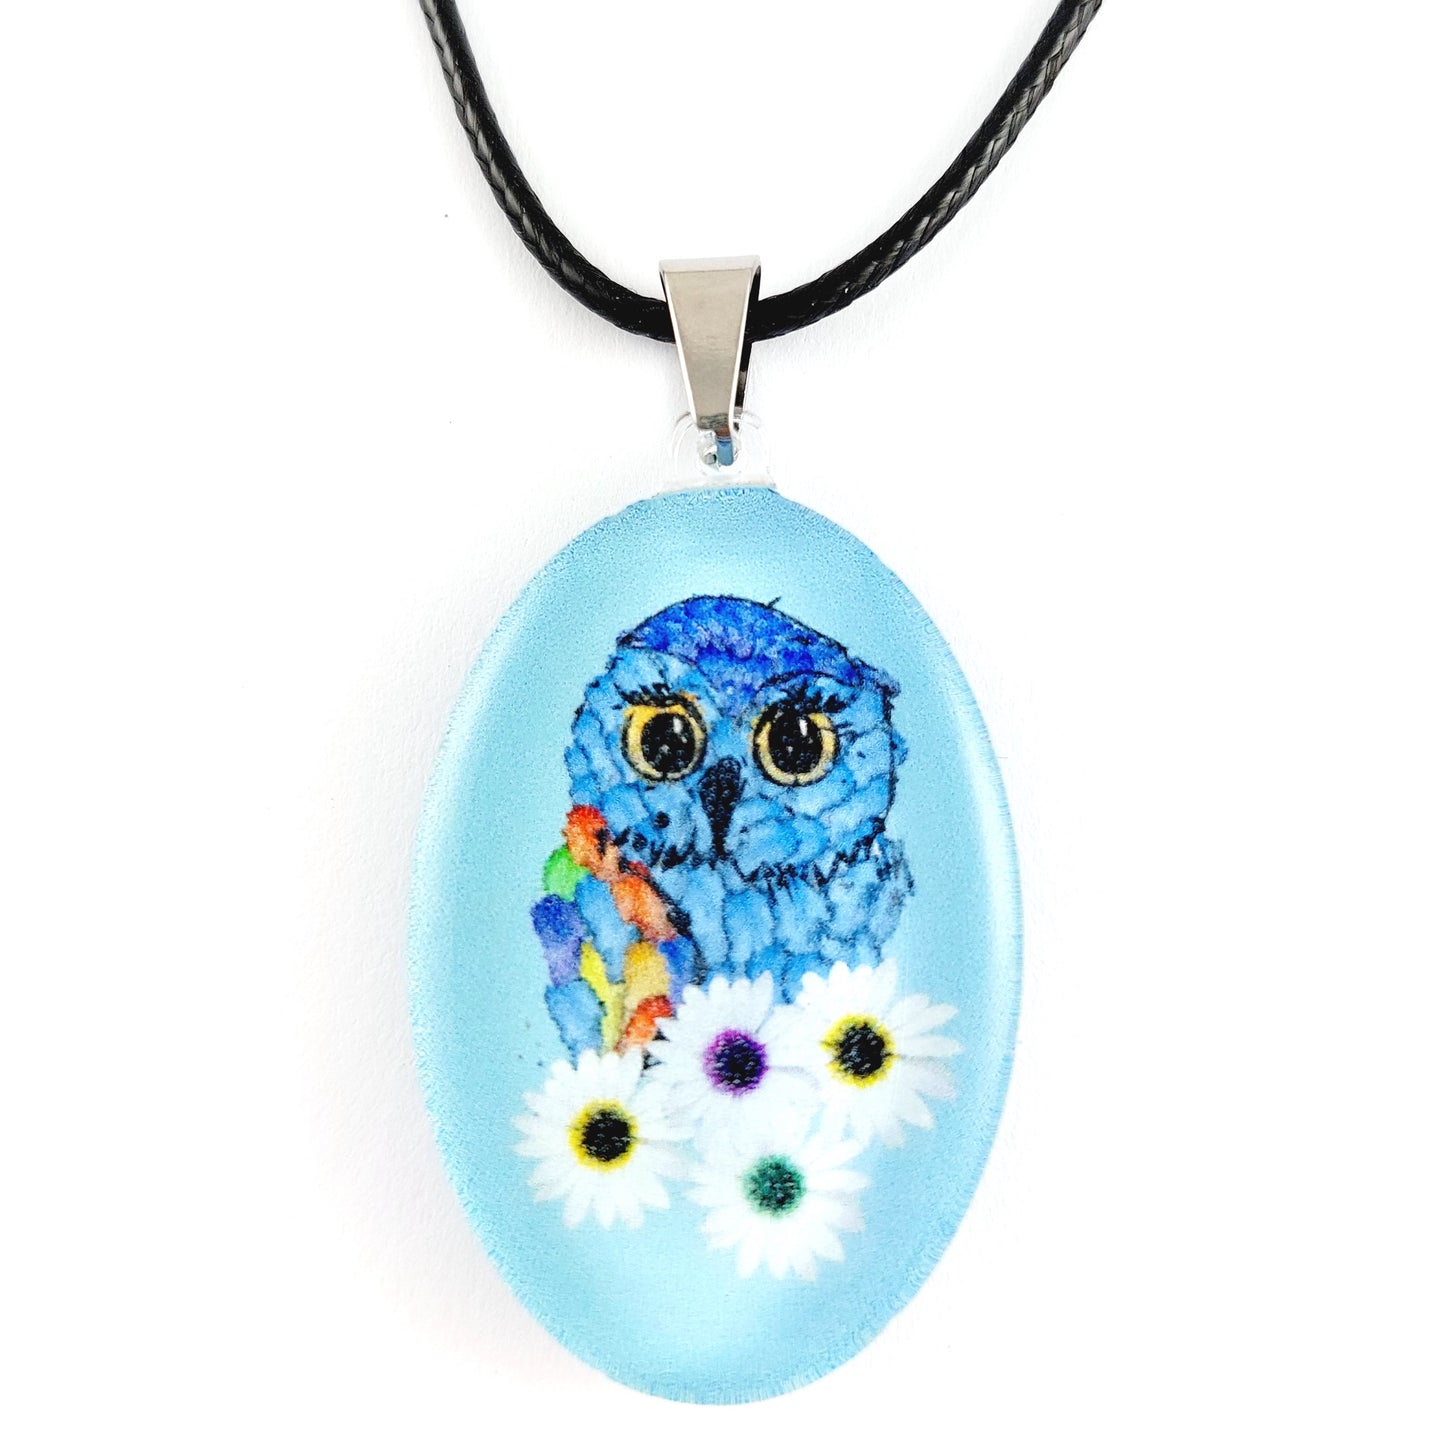 Blue Owl Pendant & Earring Set